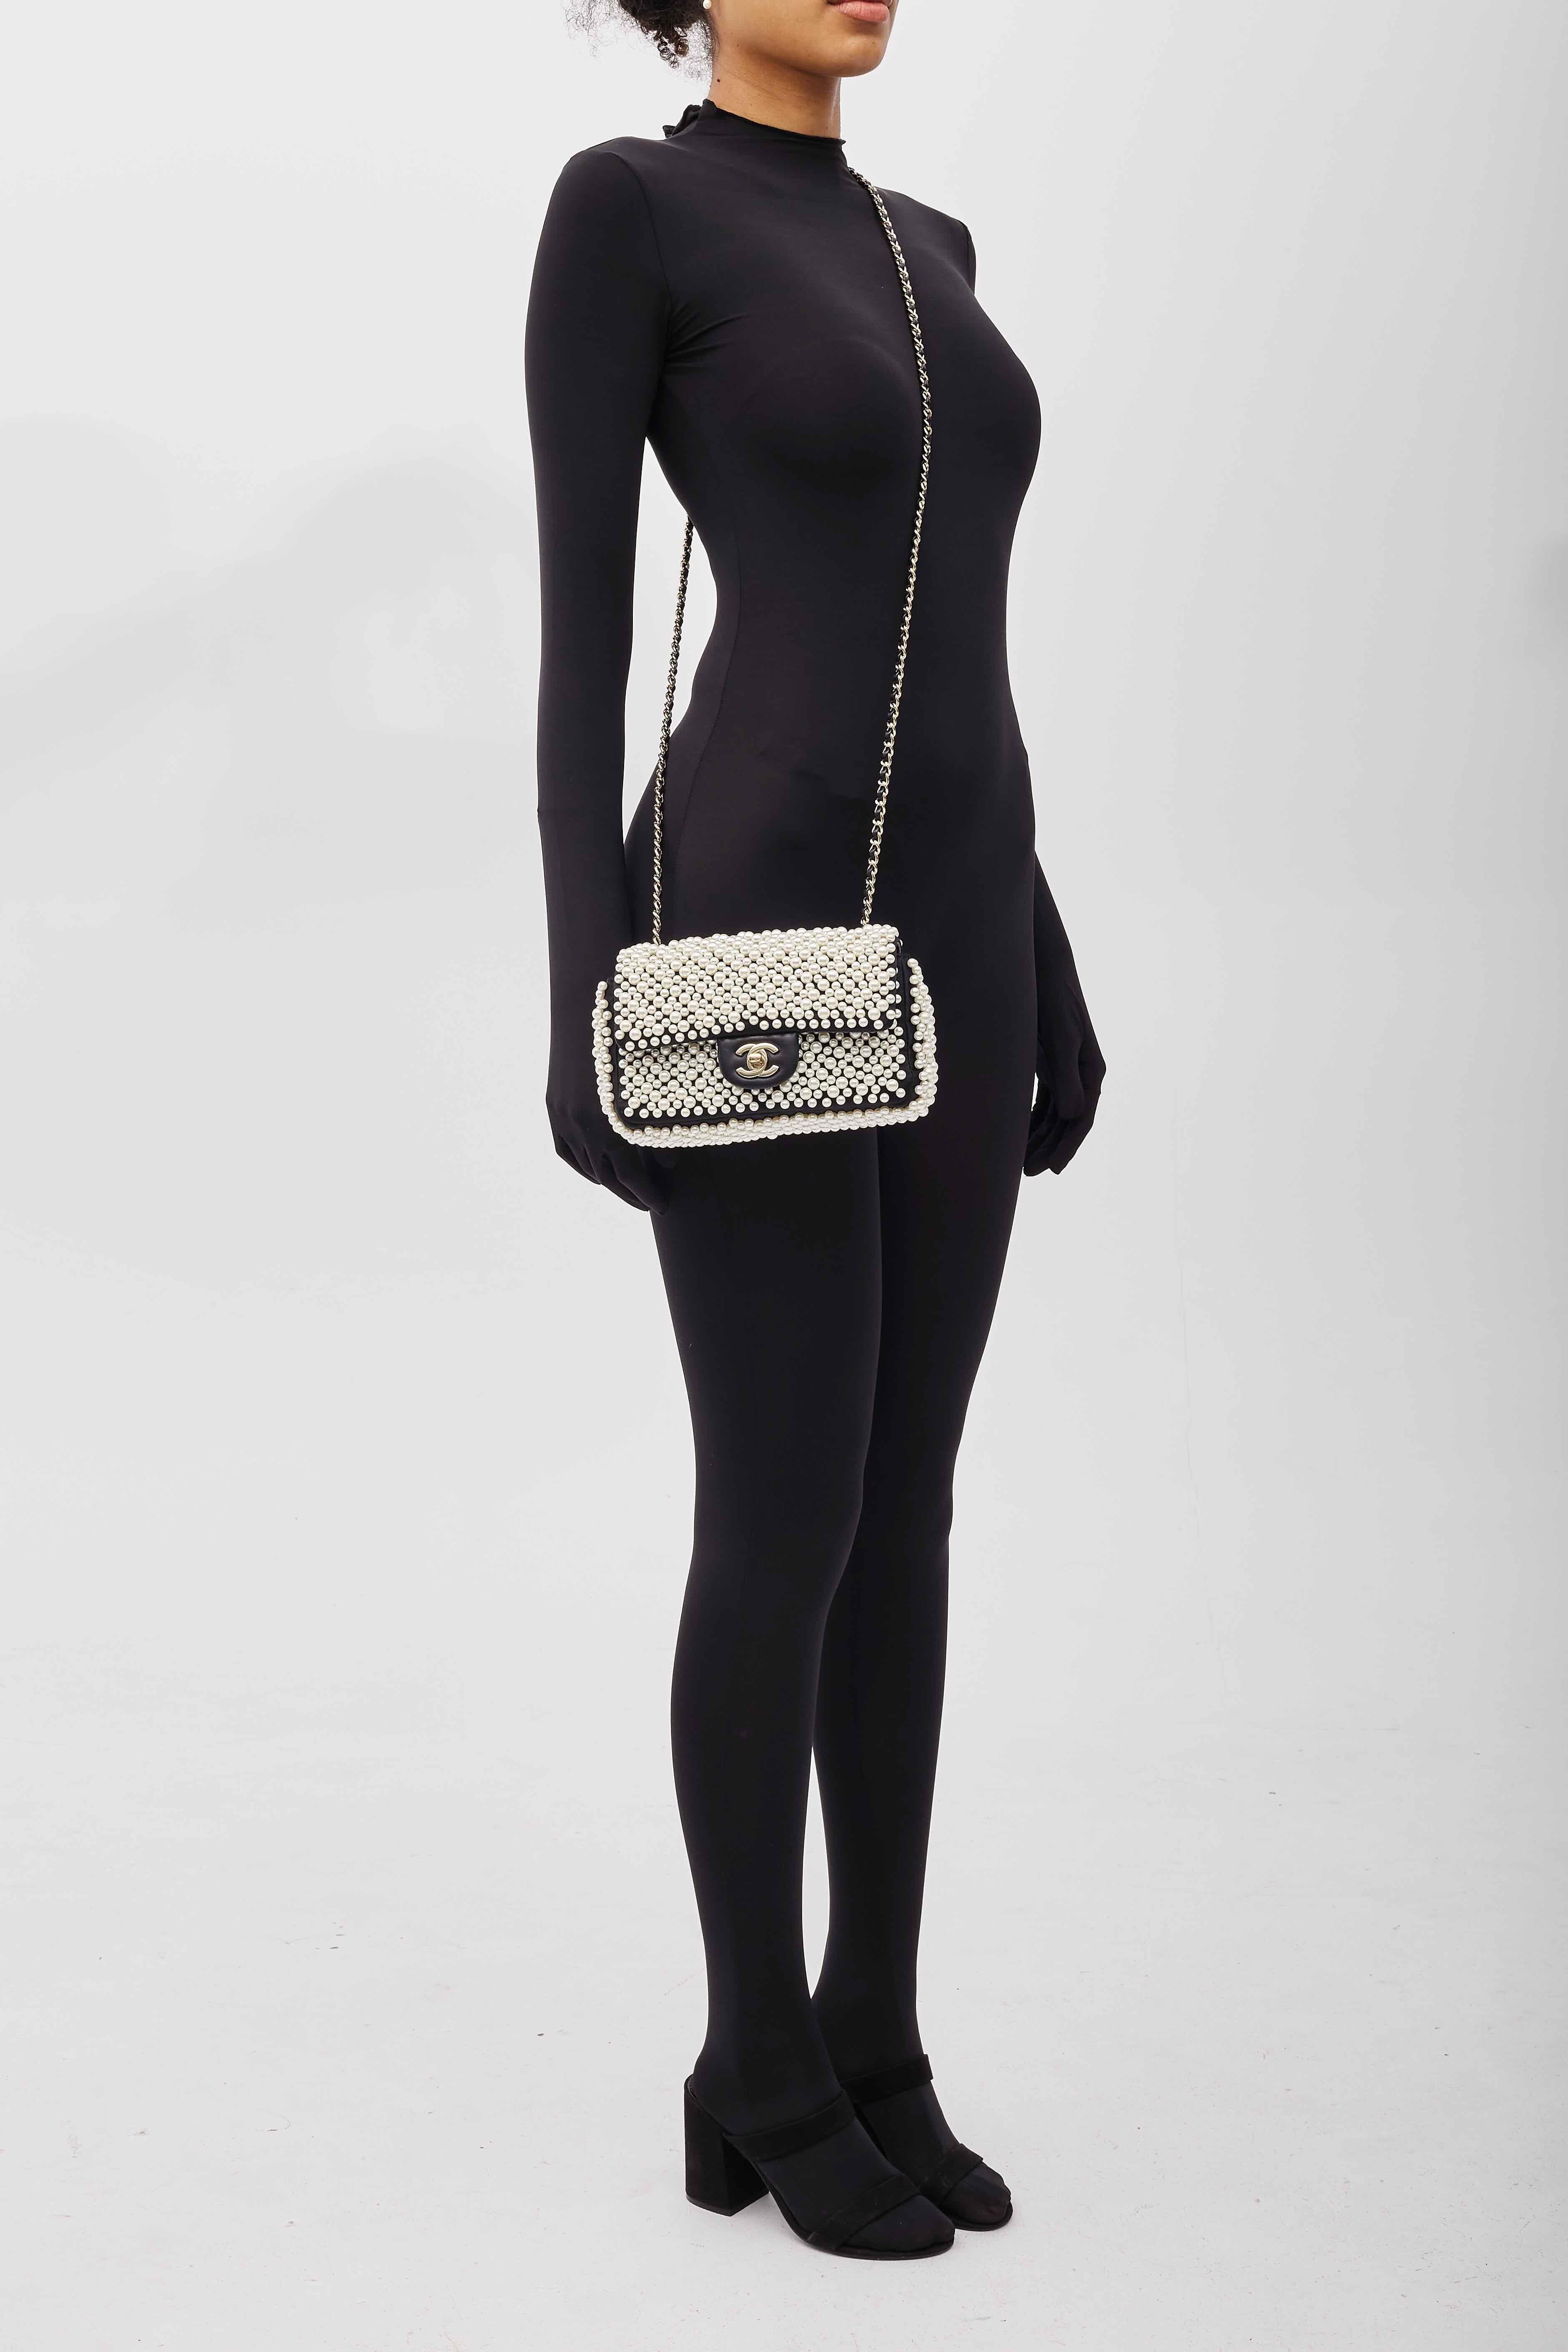 Chanel Black Lambskin Pearl on Flap Bag For Sale 6